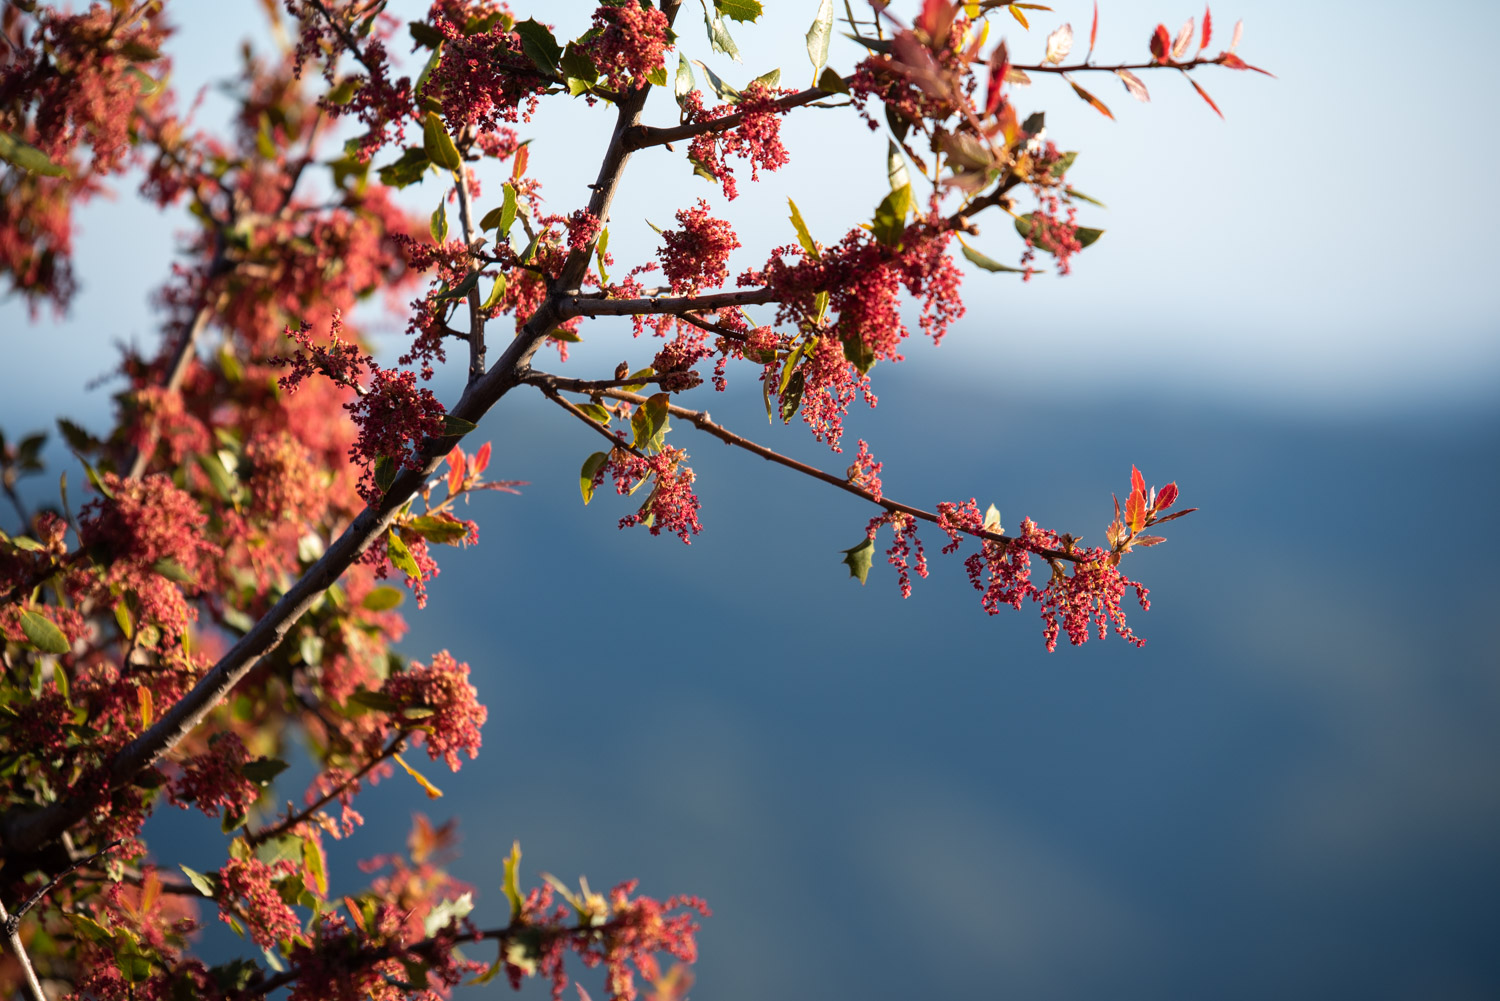 Canyon Live Oak (Quercus chrysolepis) Flowers